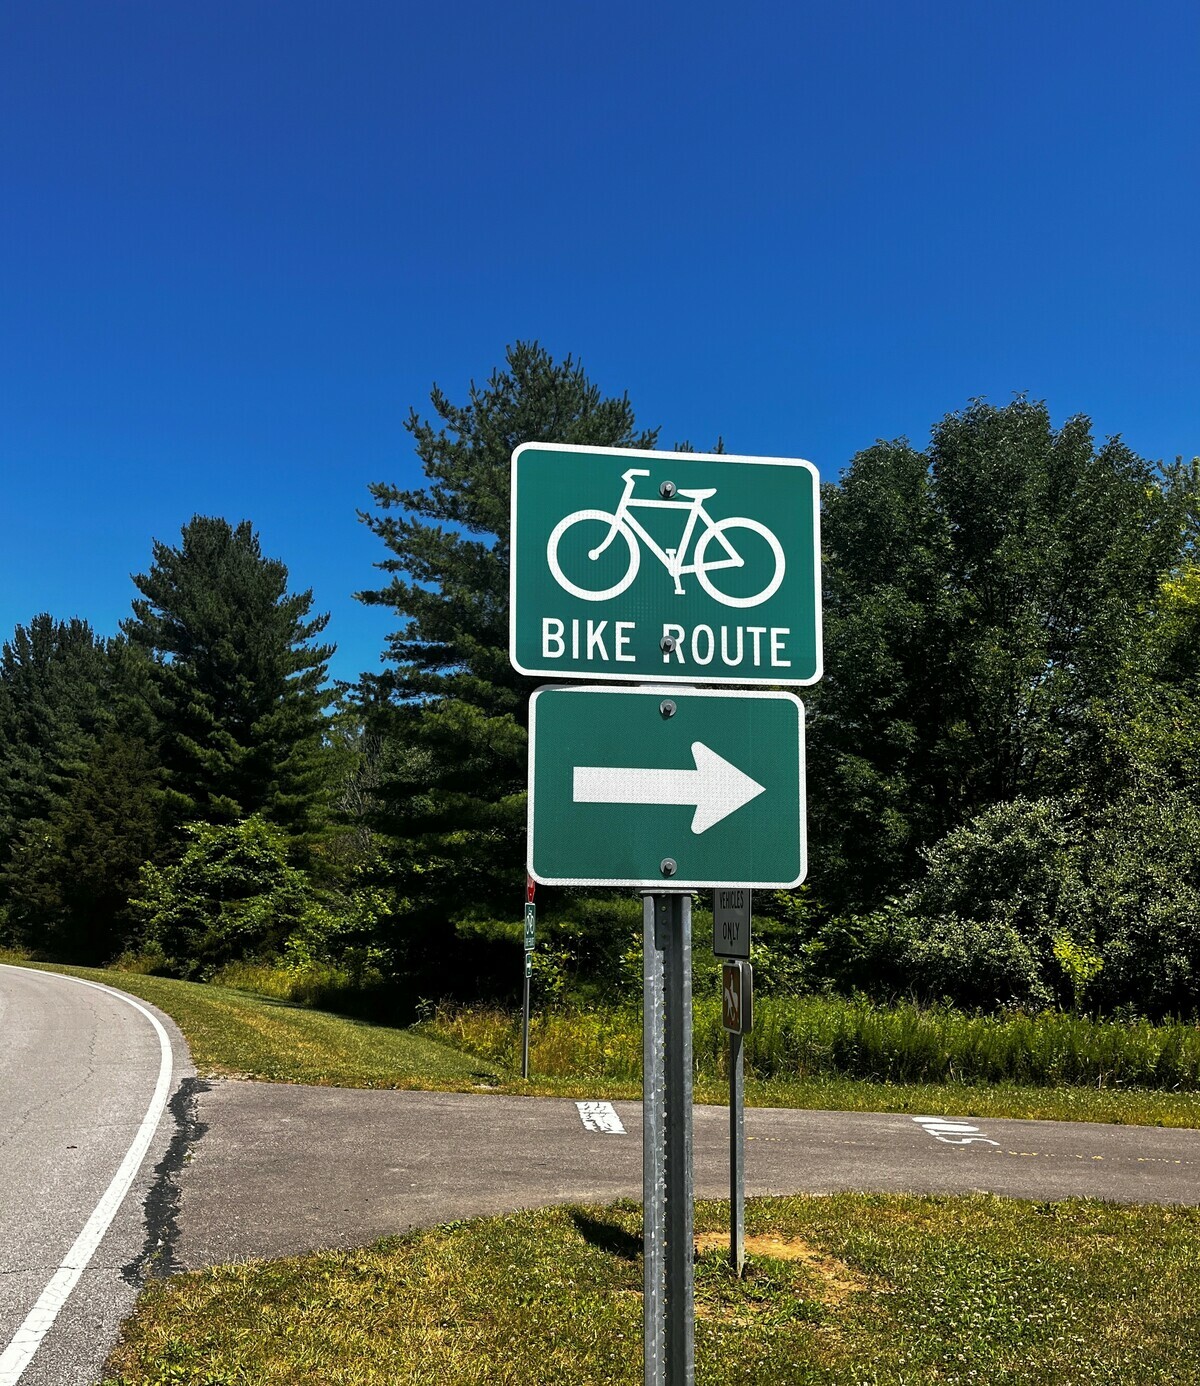 Bike Route signage